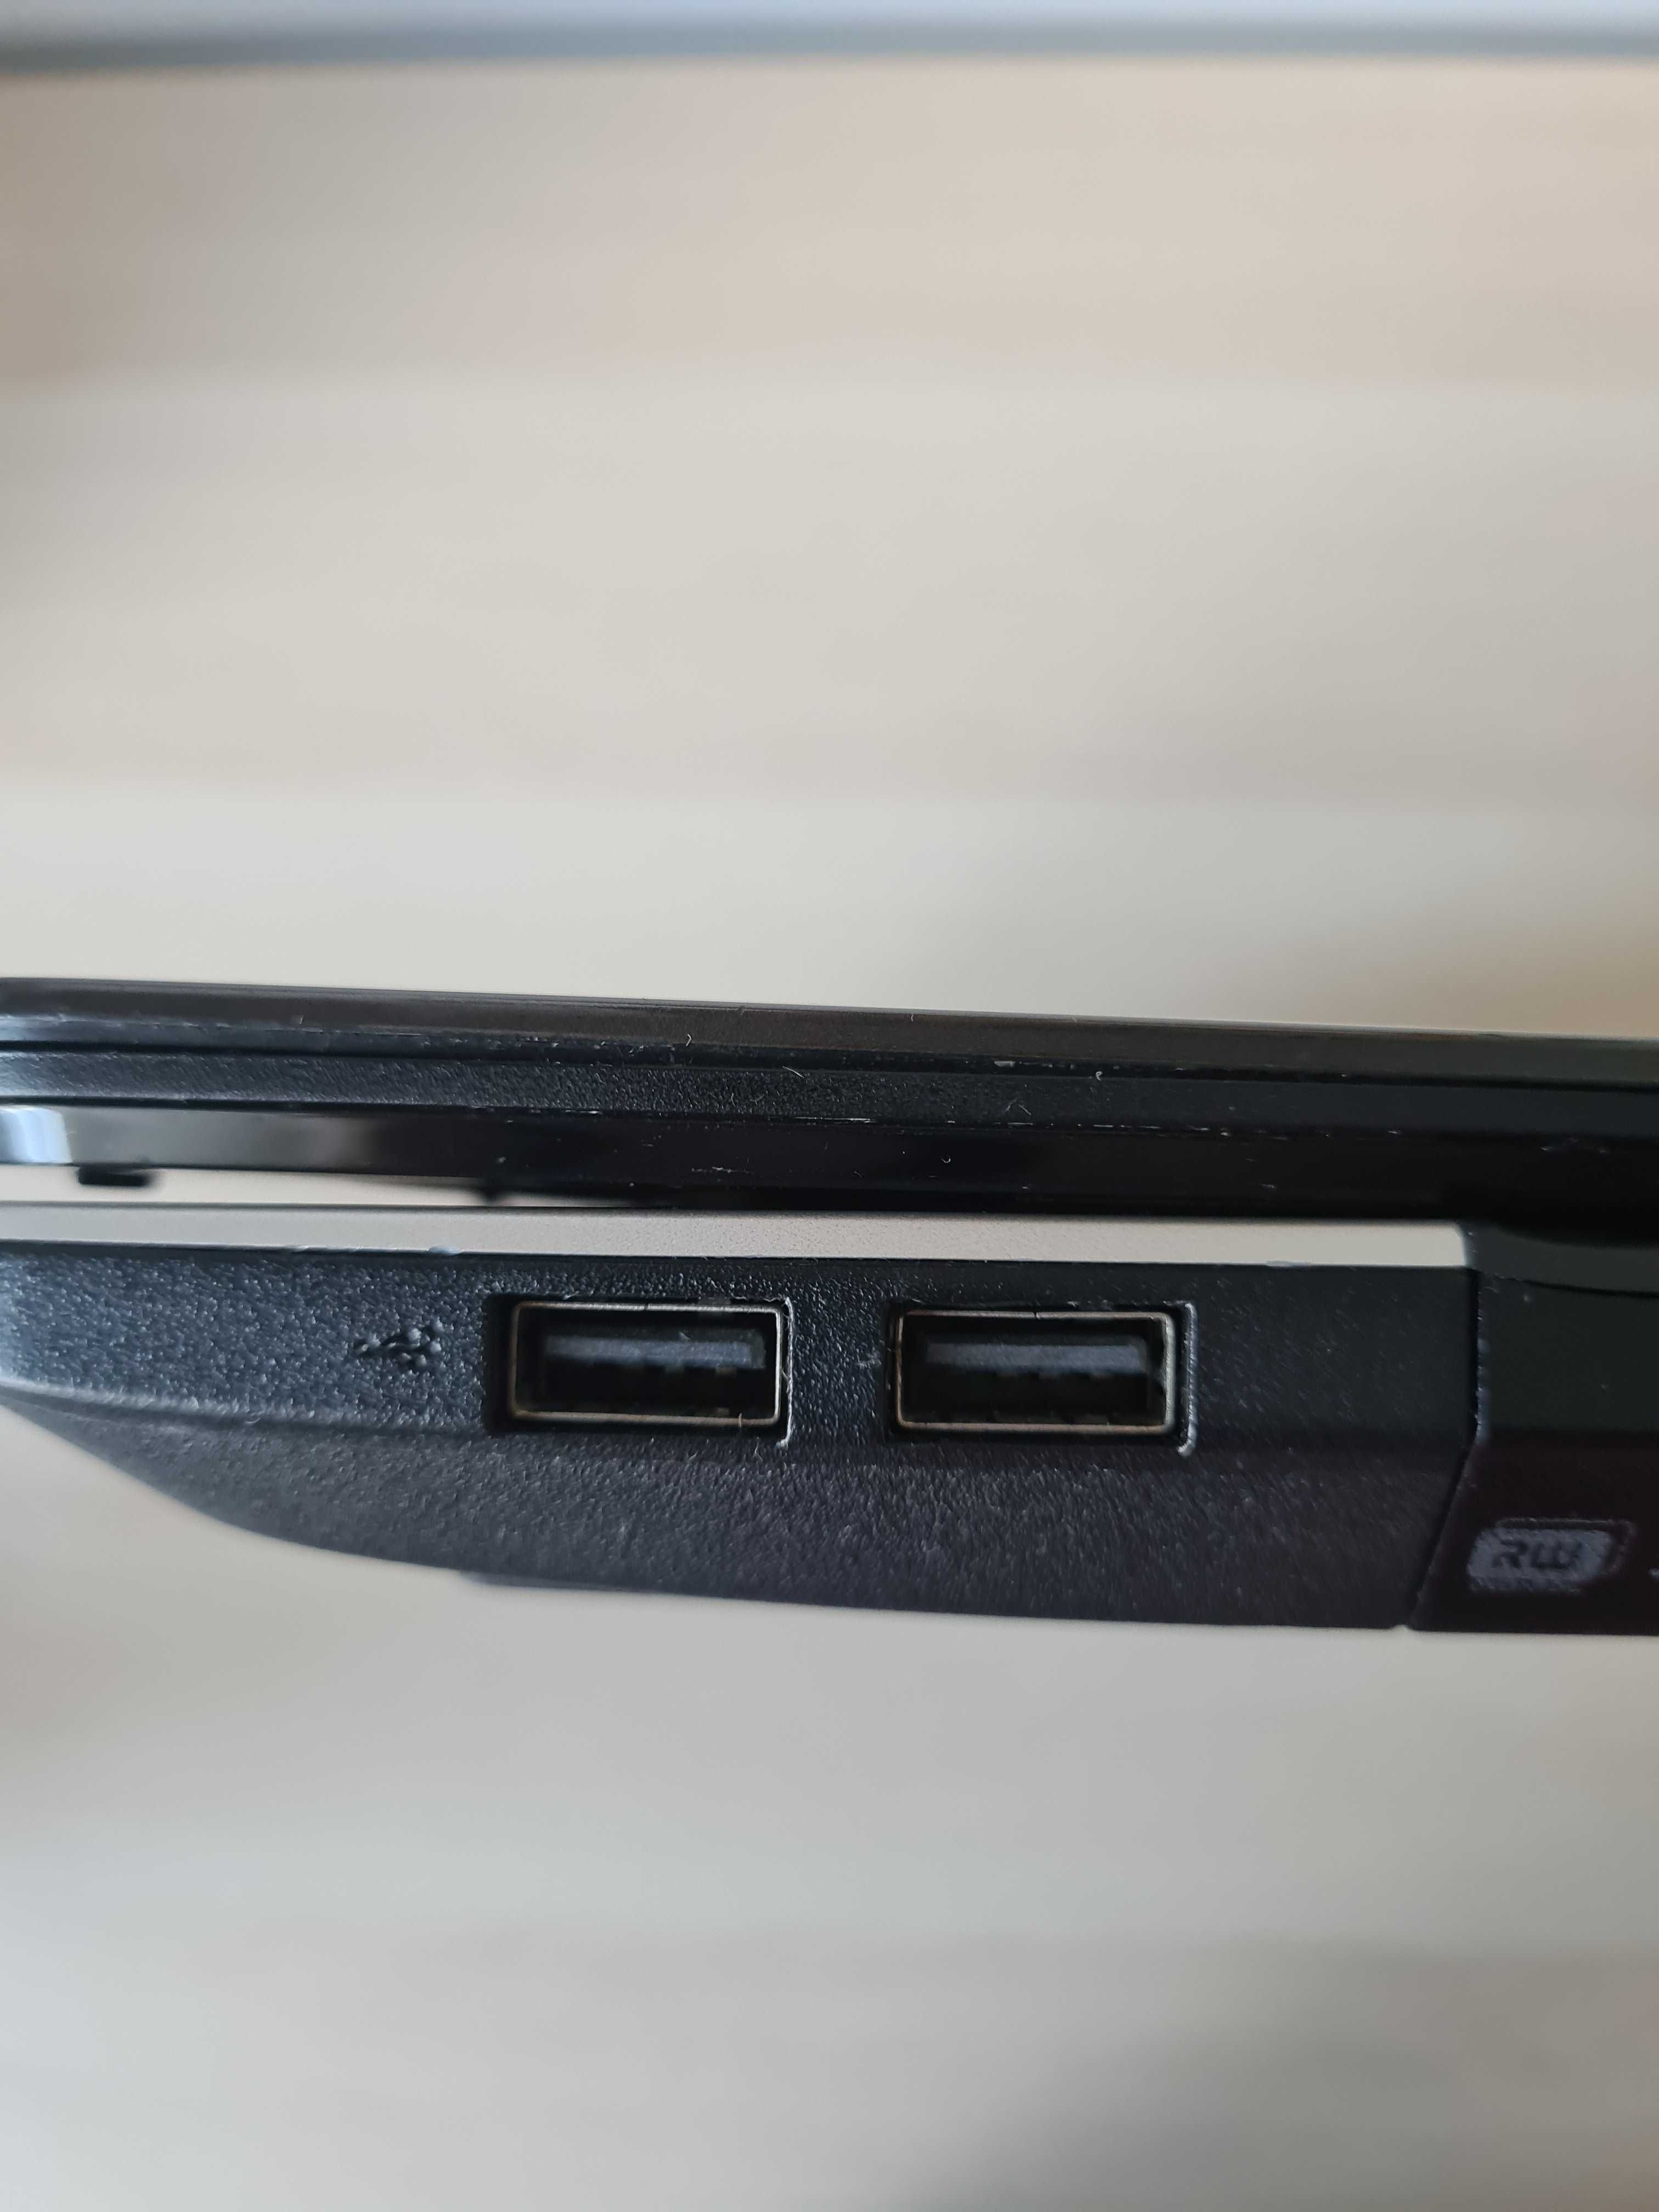 Laptop Acer E1 571G